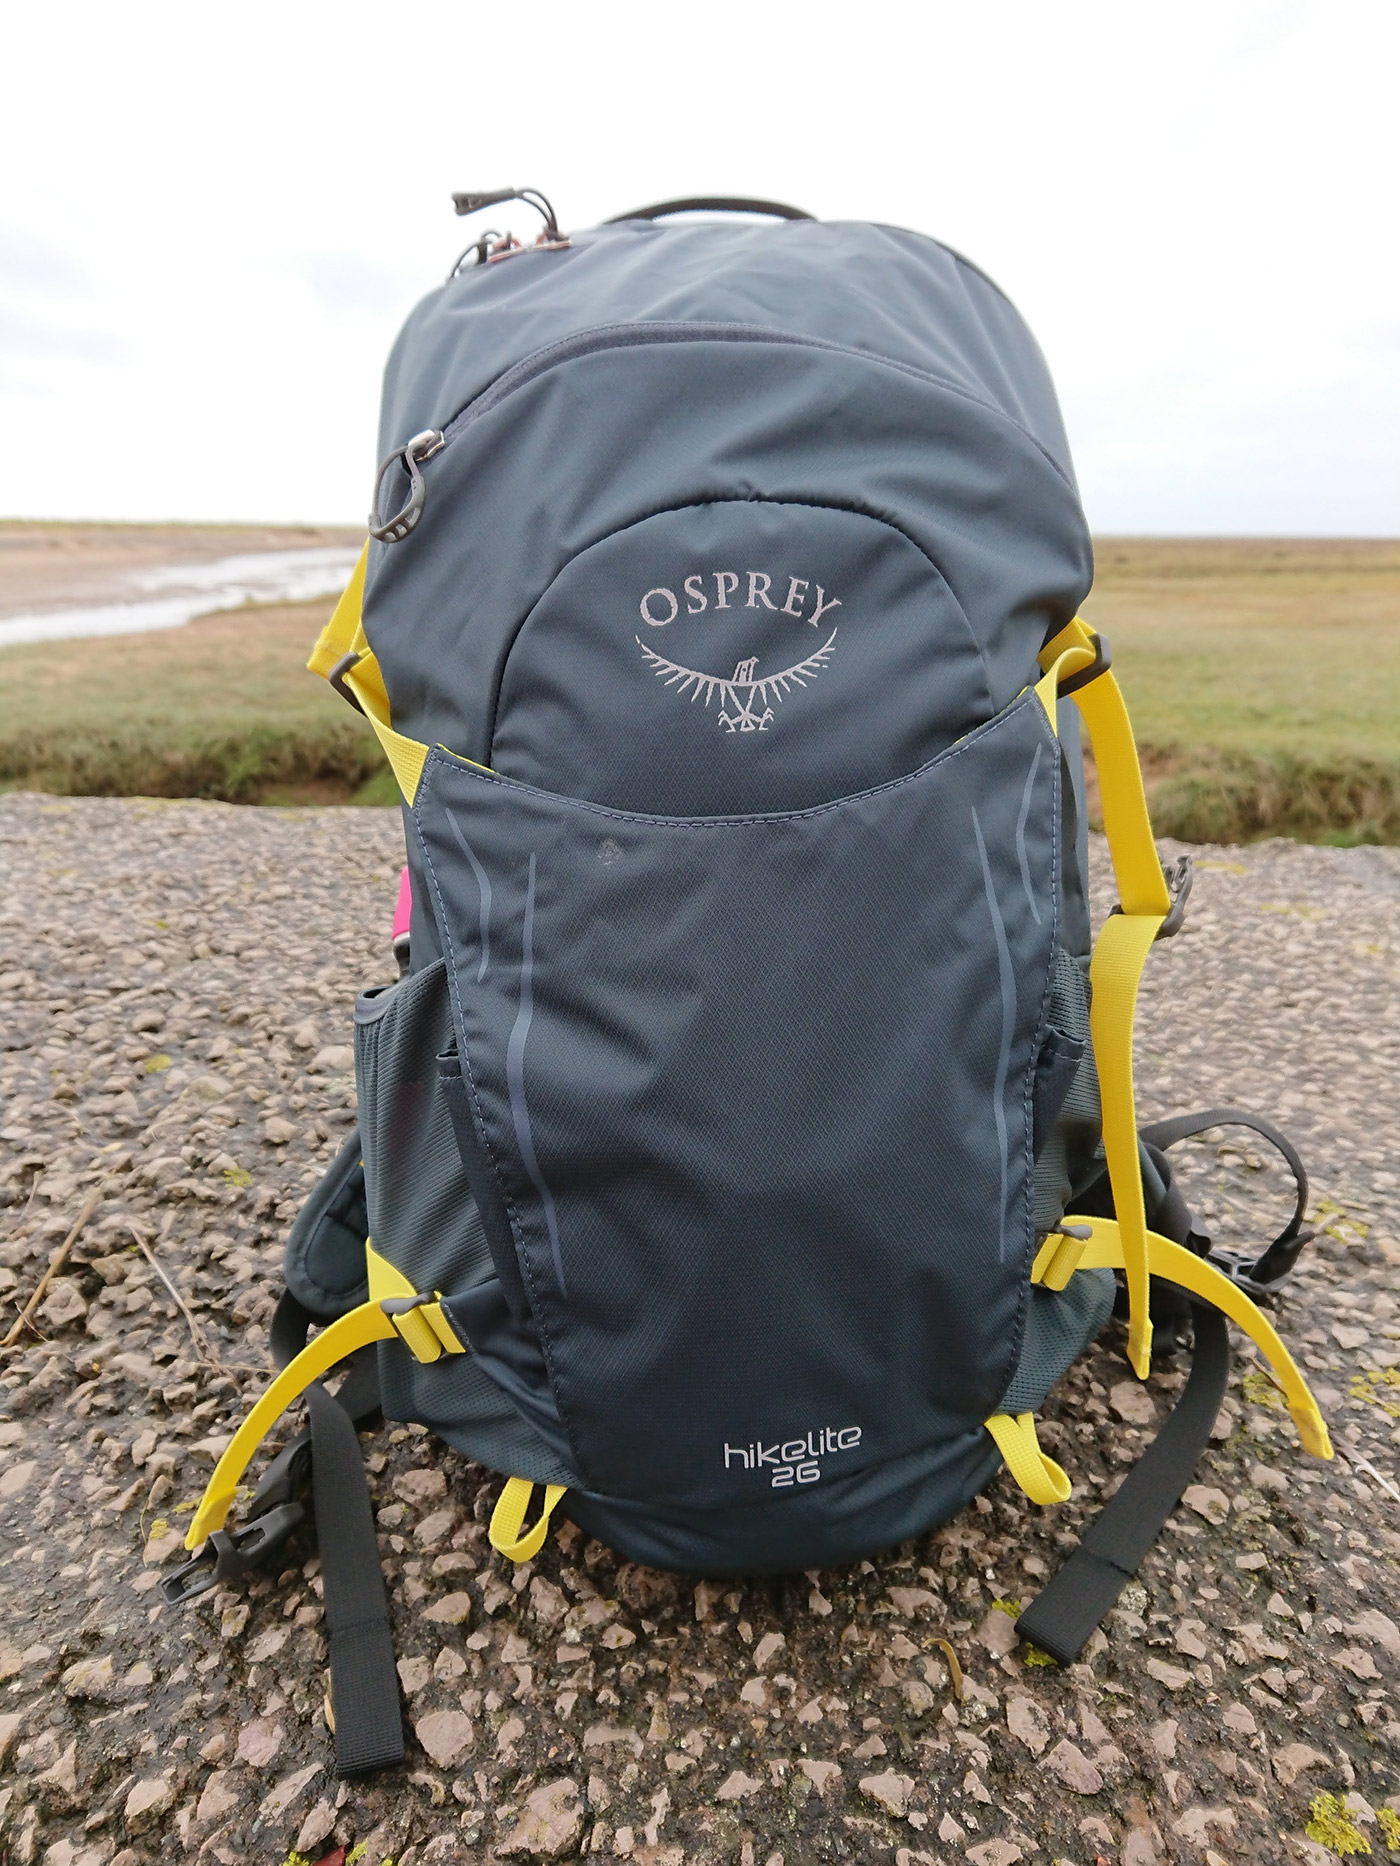 Osprey Hikelite Backpack Review